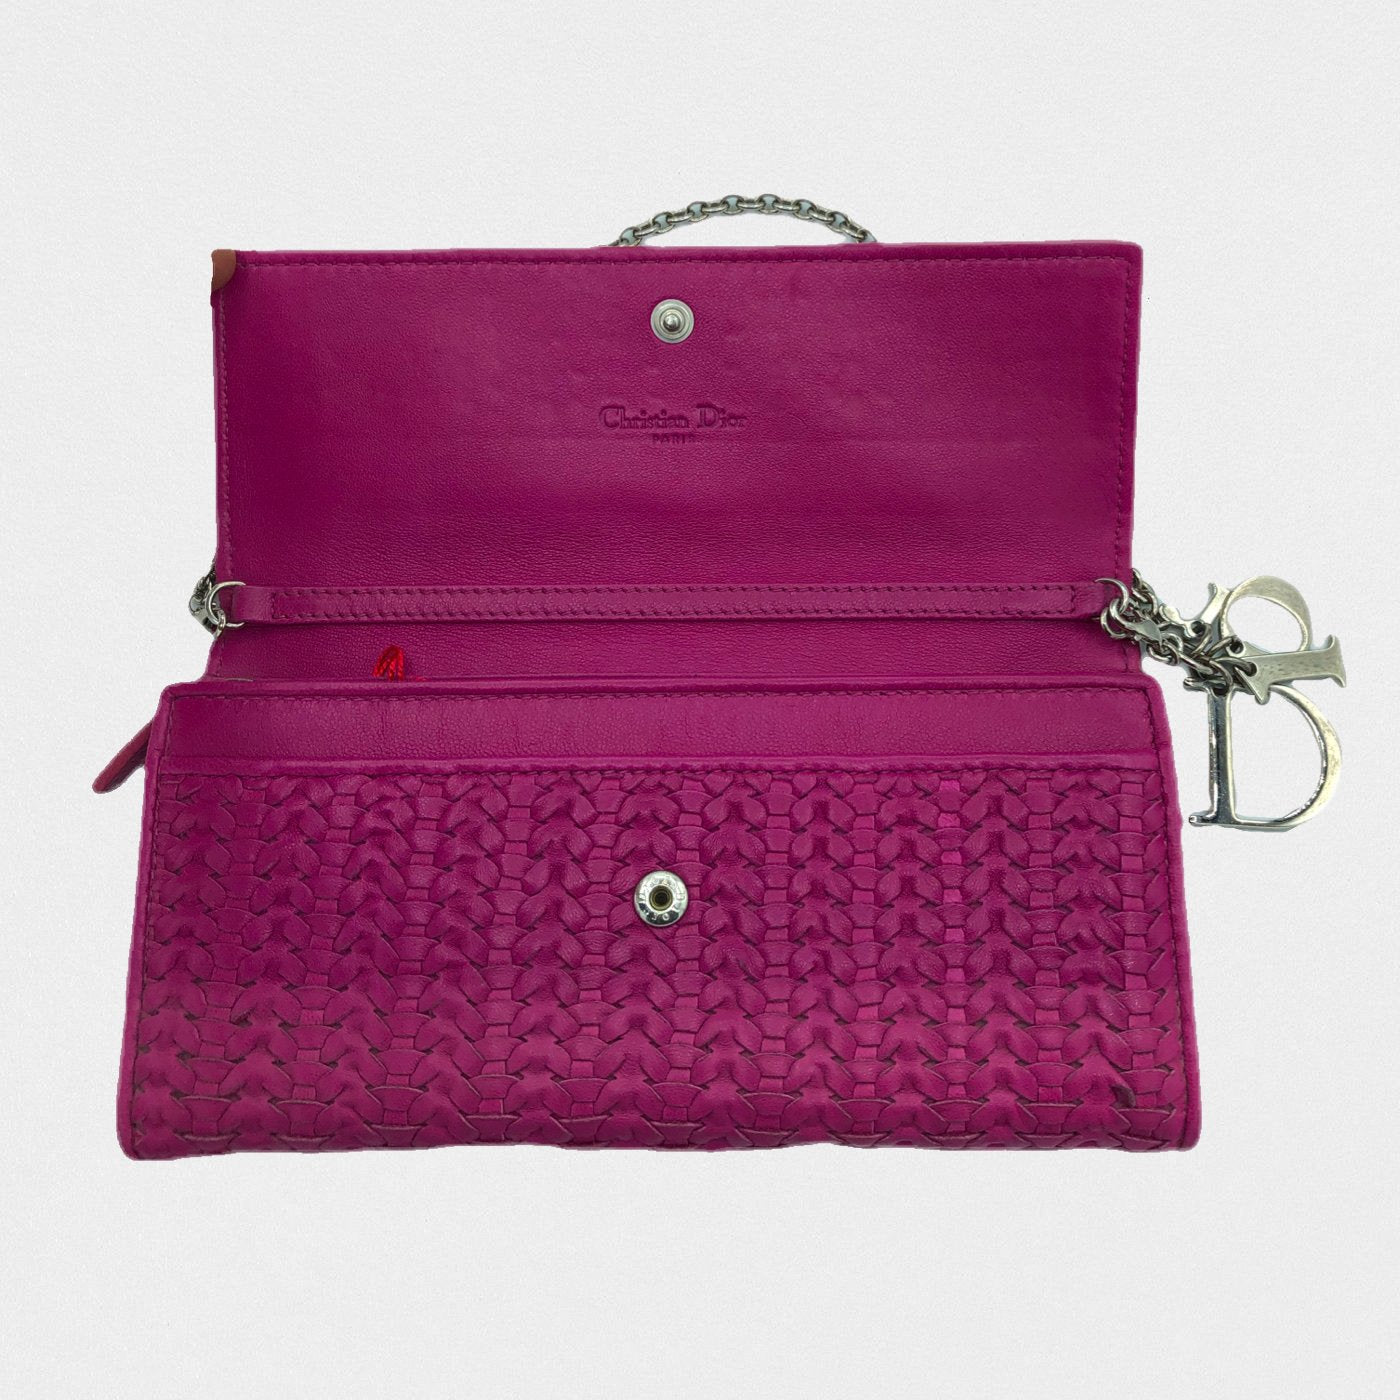 Lysis vintage Dior braided clutch - 2012